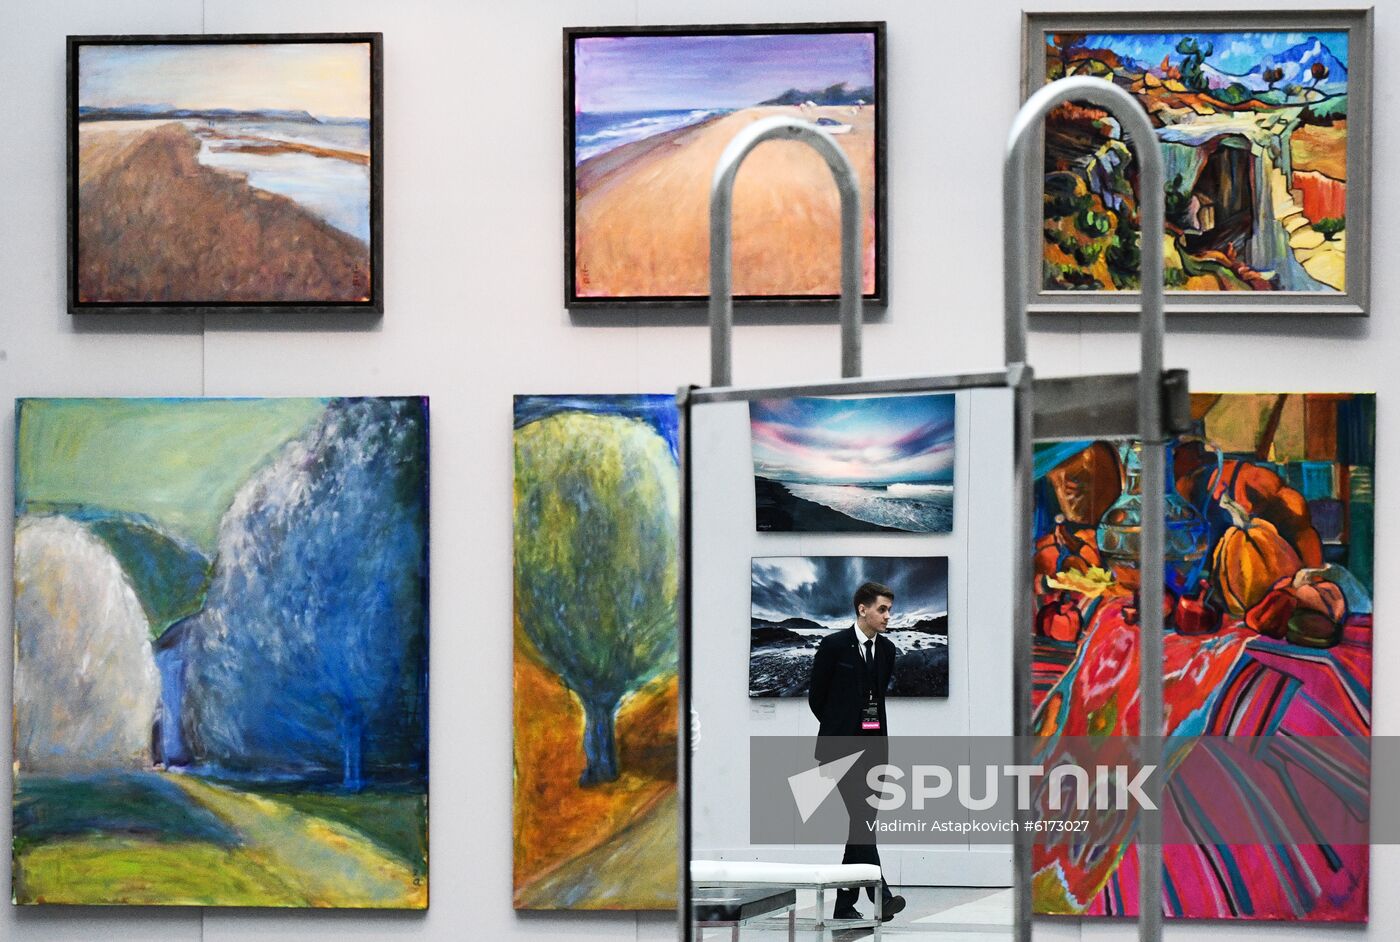 Russia Contemporary Art Fair